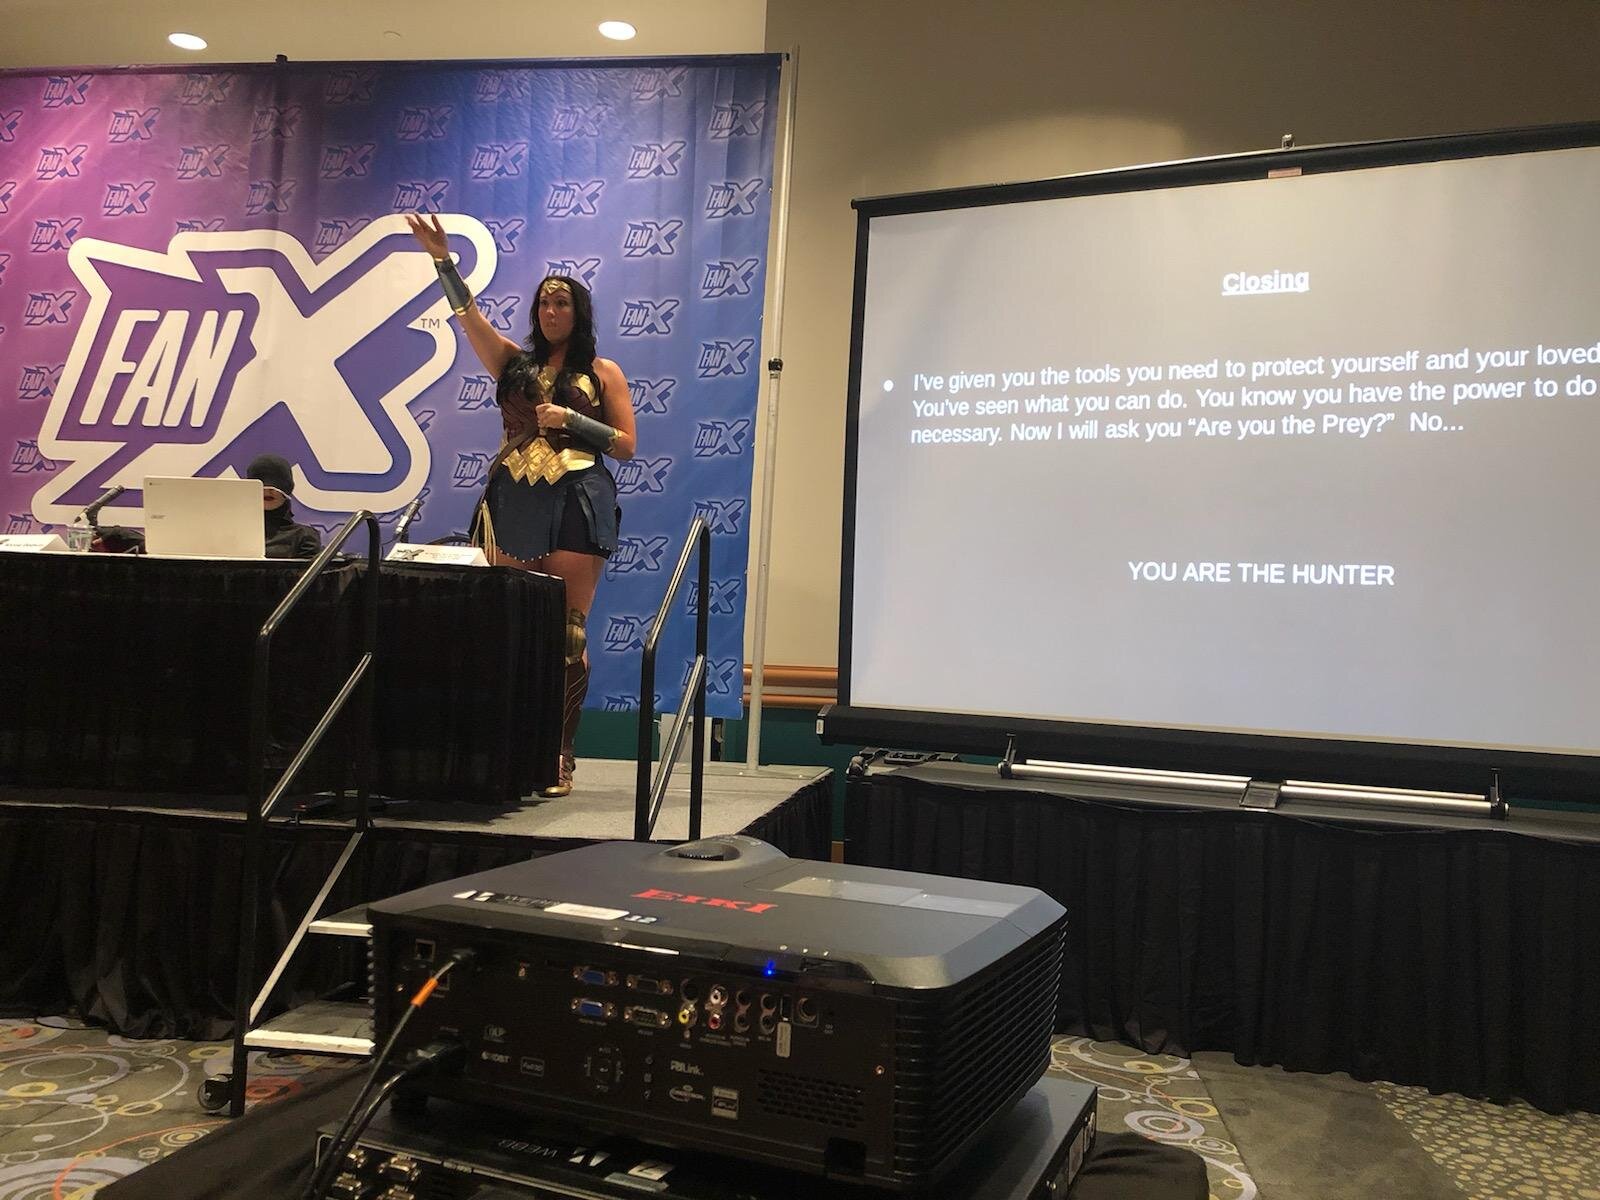 Alyssa cosplaying Wonder Woman teaches behavioral profiling at FanX